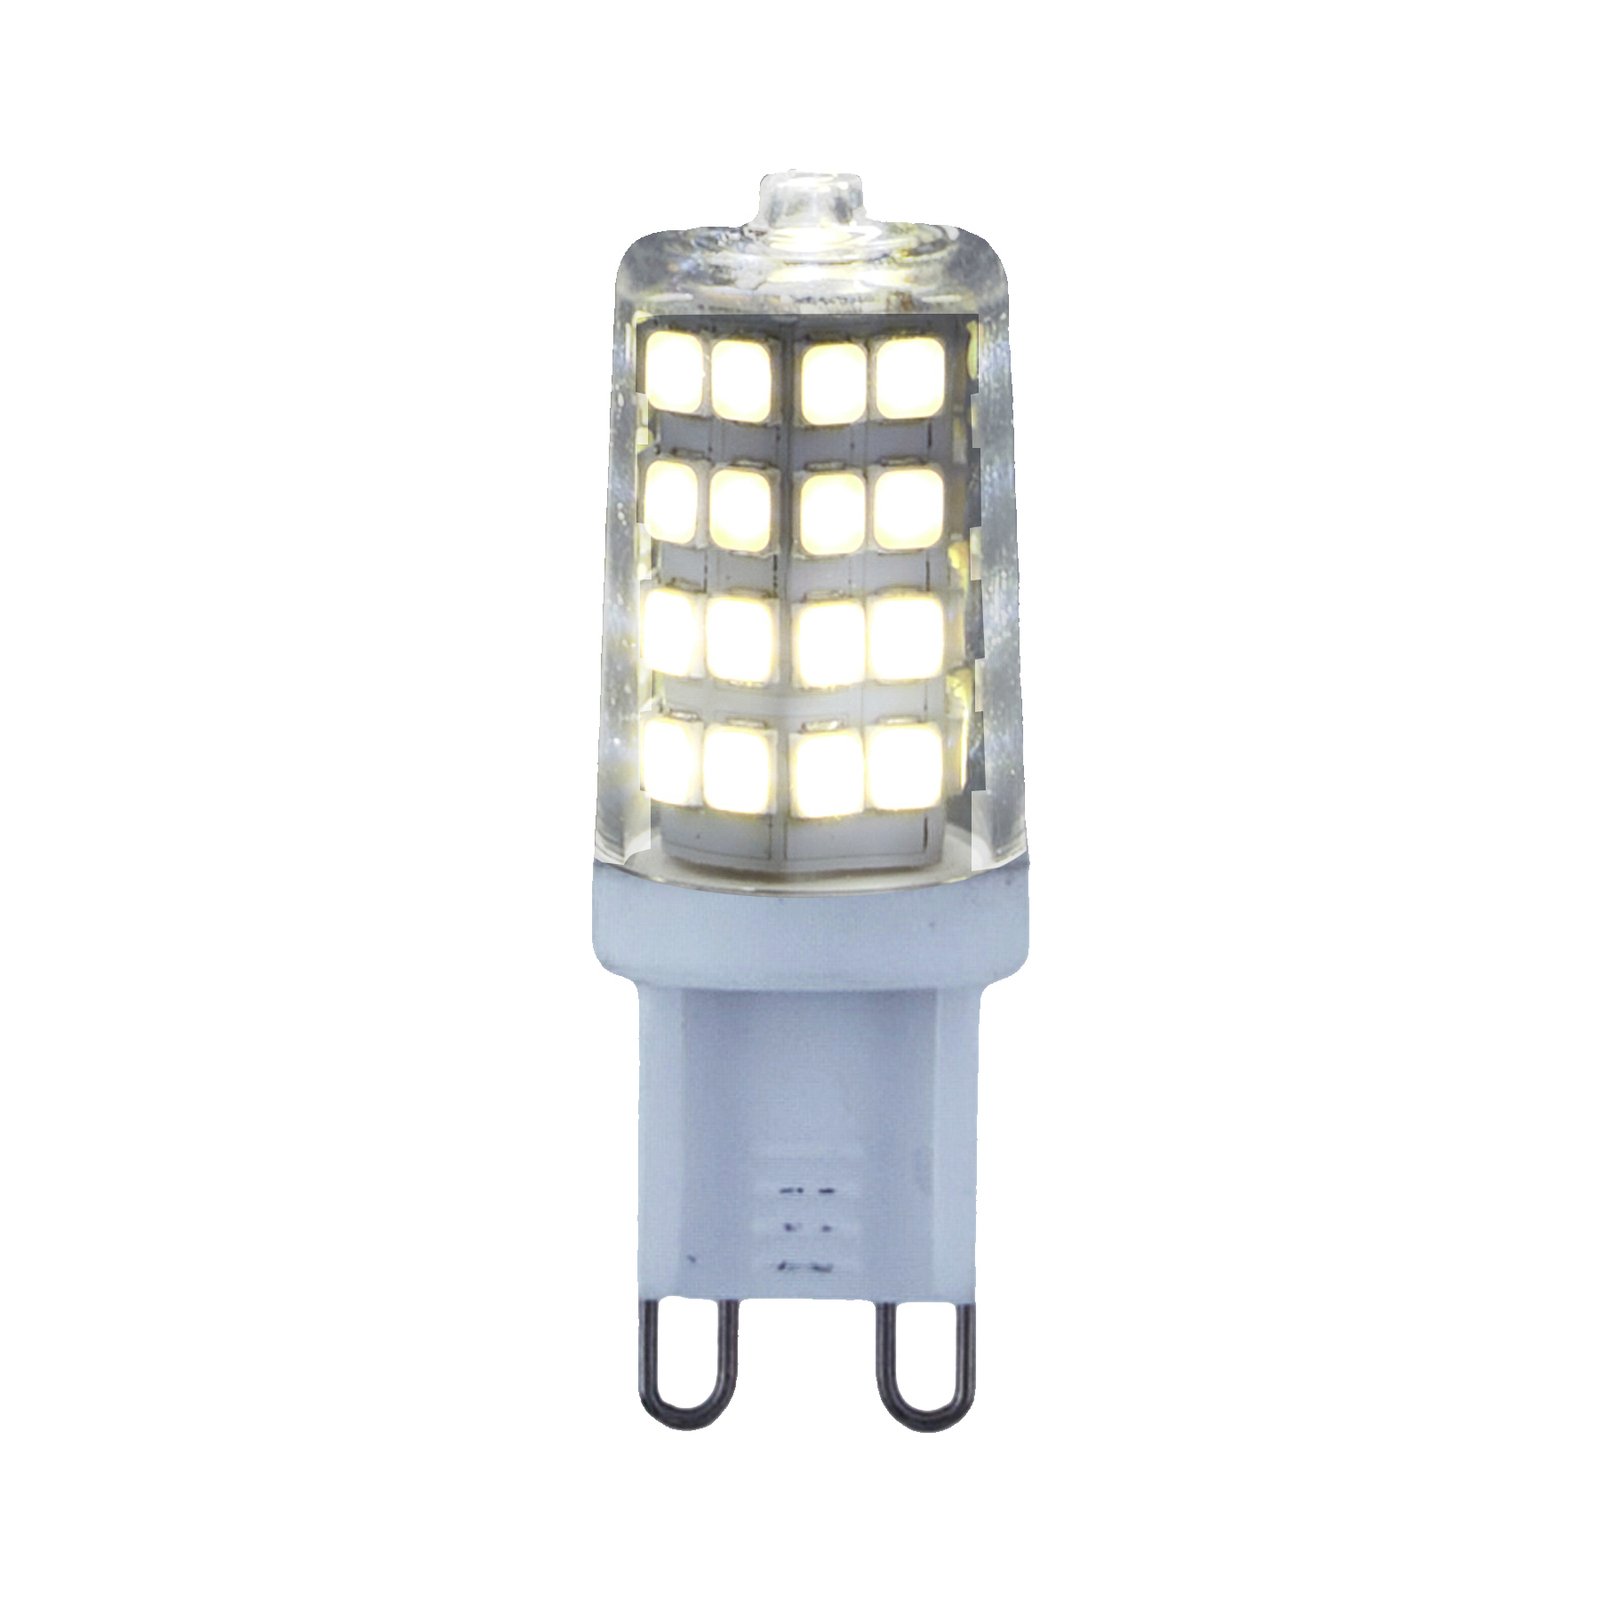 Lindby LED penlight, G9, 3 W, διαφανές, 4.000 K, 350 lm